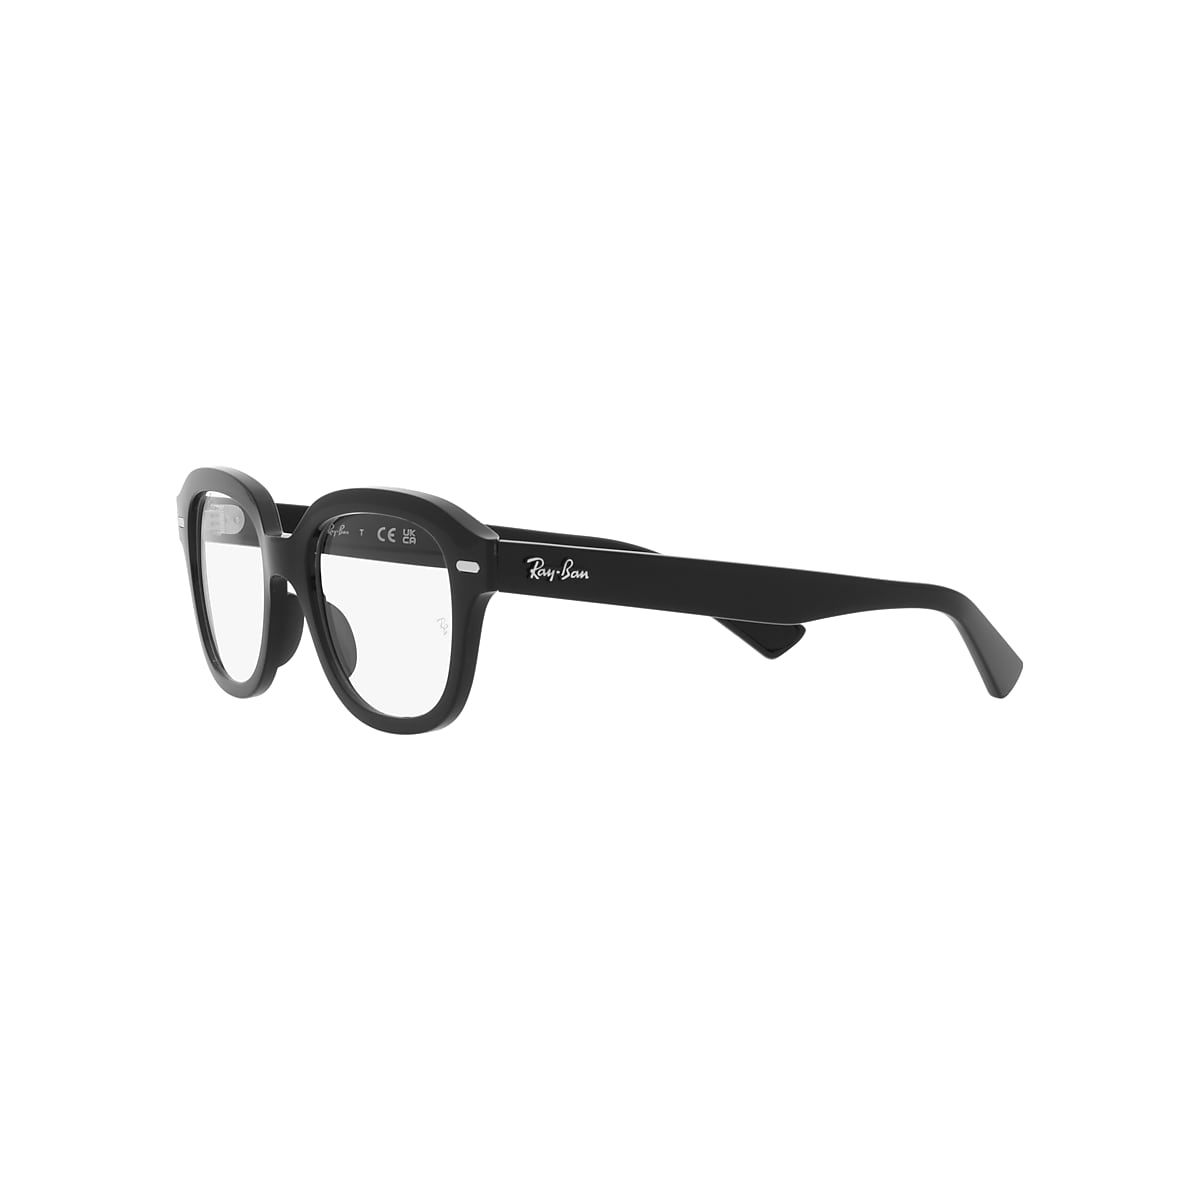 ERIK OPTICS Eyeglasses with Black Frame - RB7215 | Ray-Ban® US